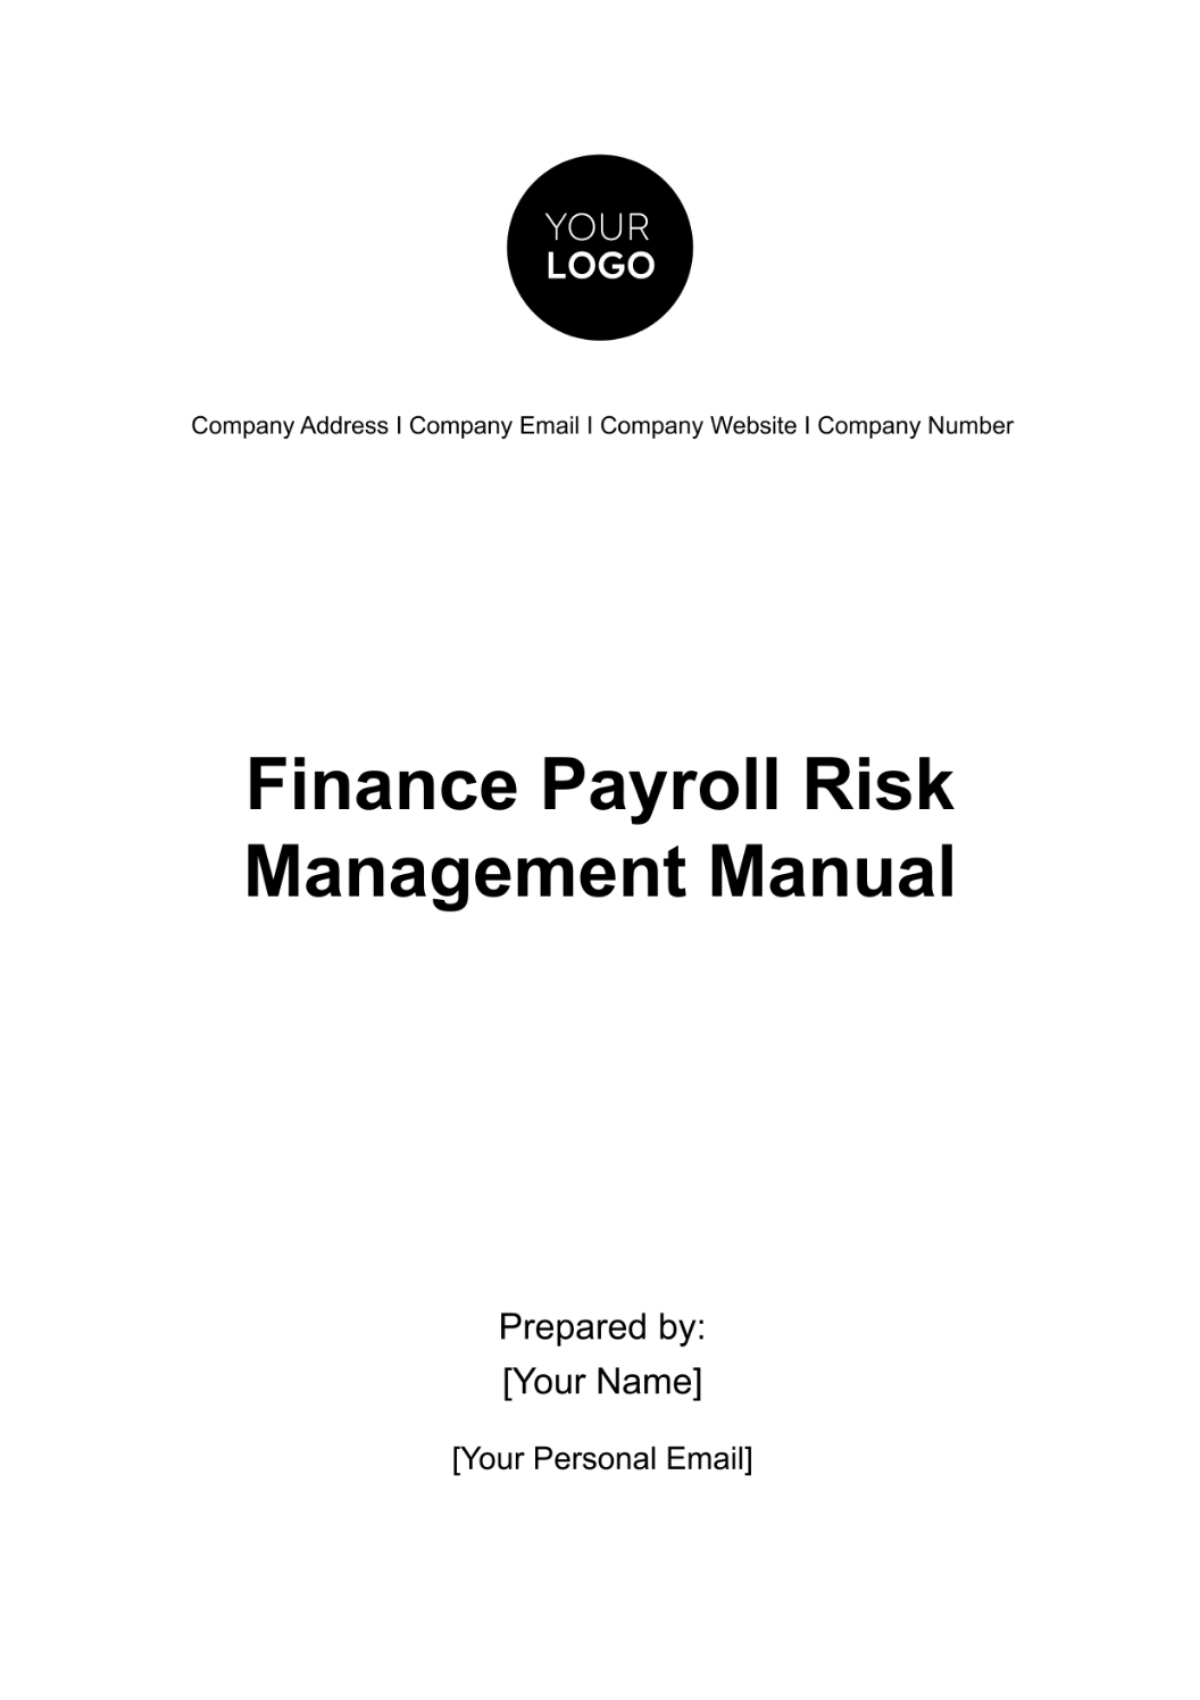 Finance Payroll Risk Management Manual Template